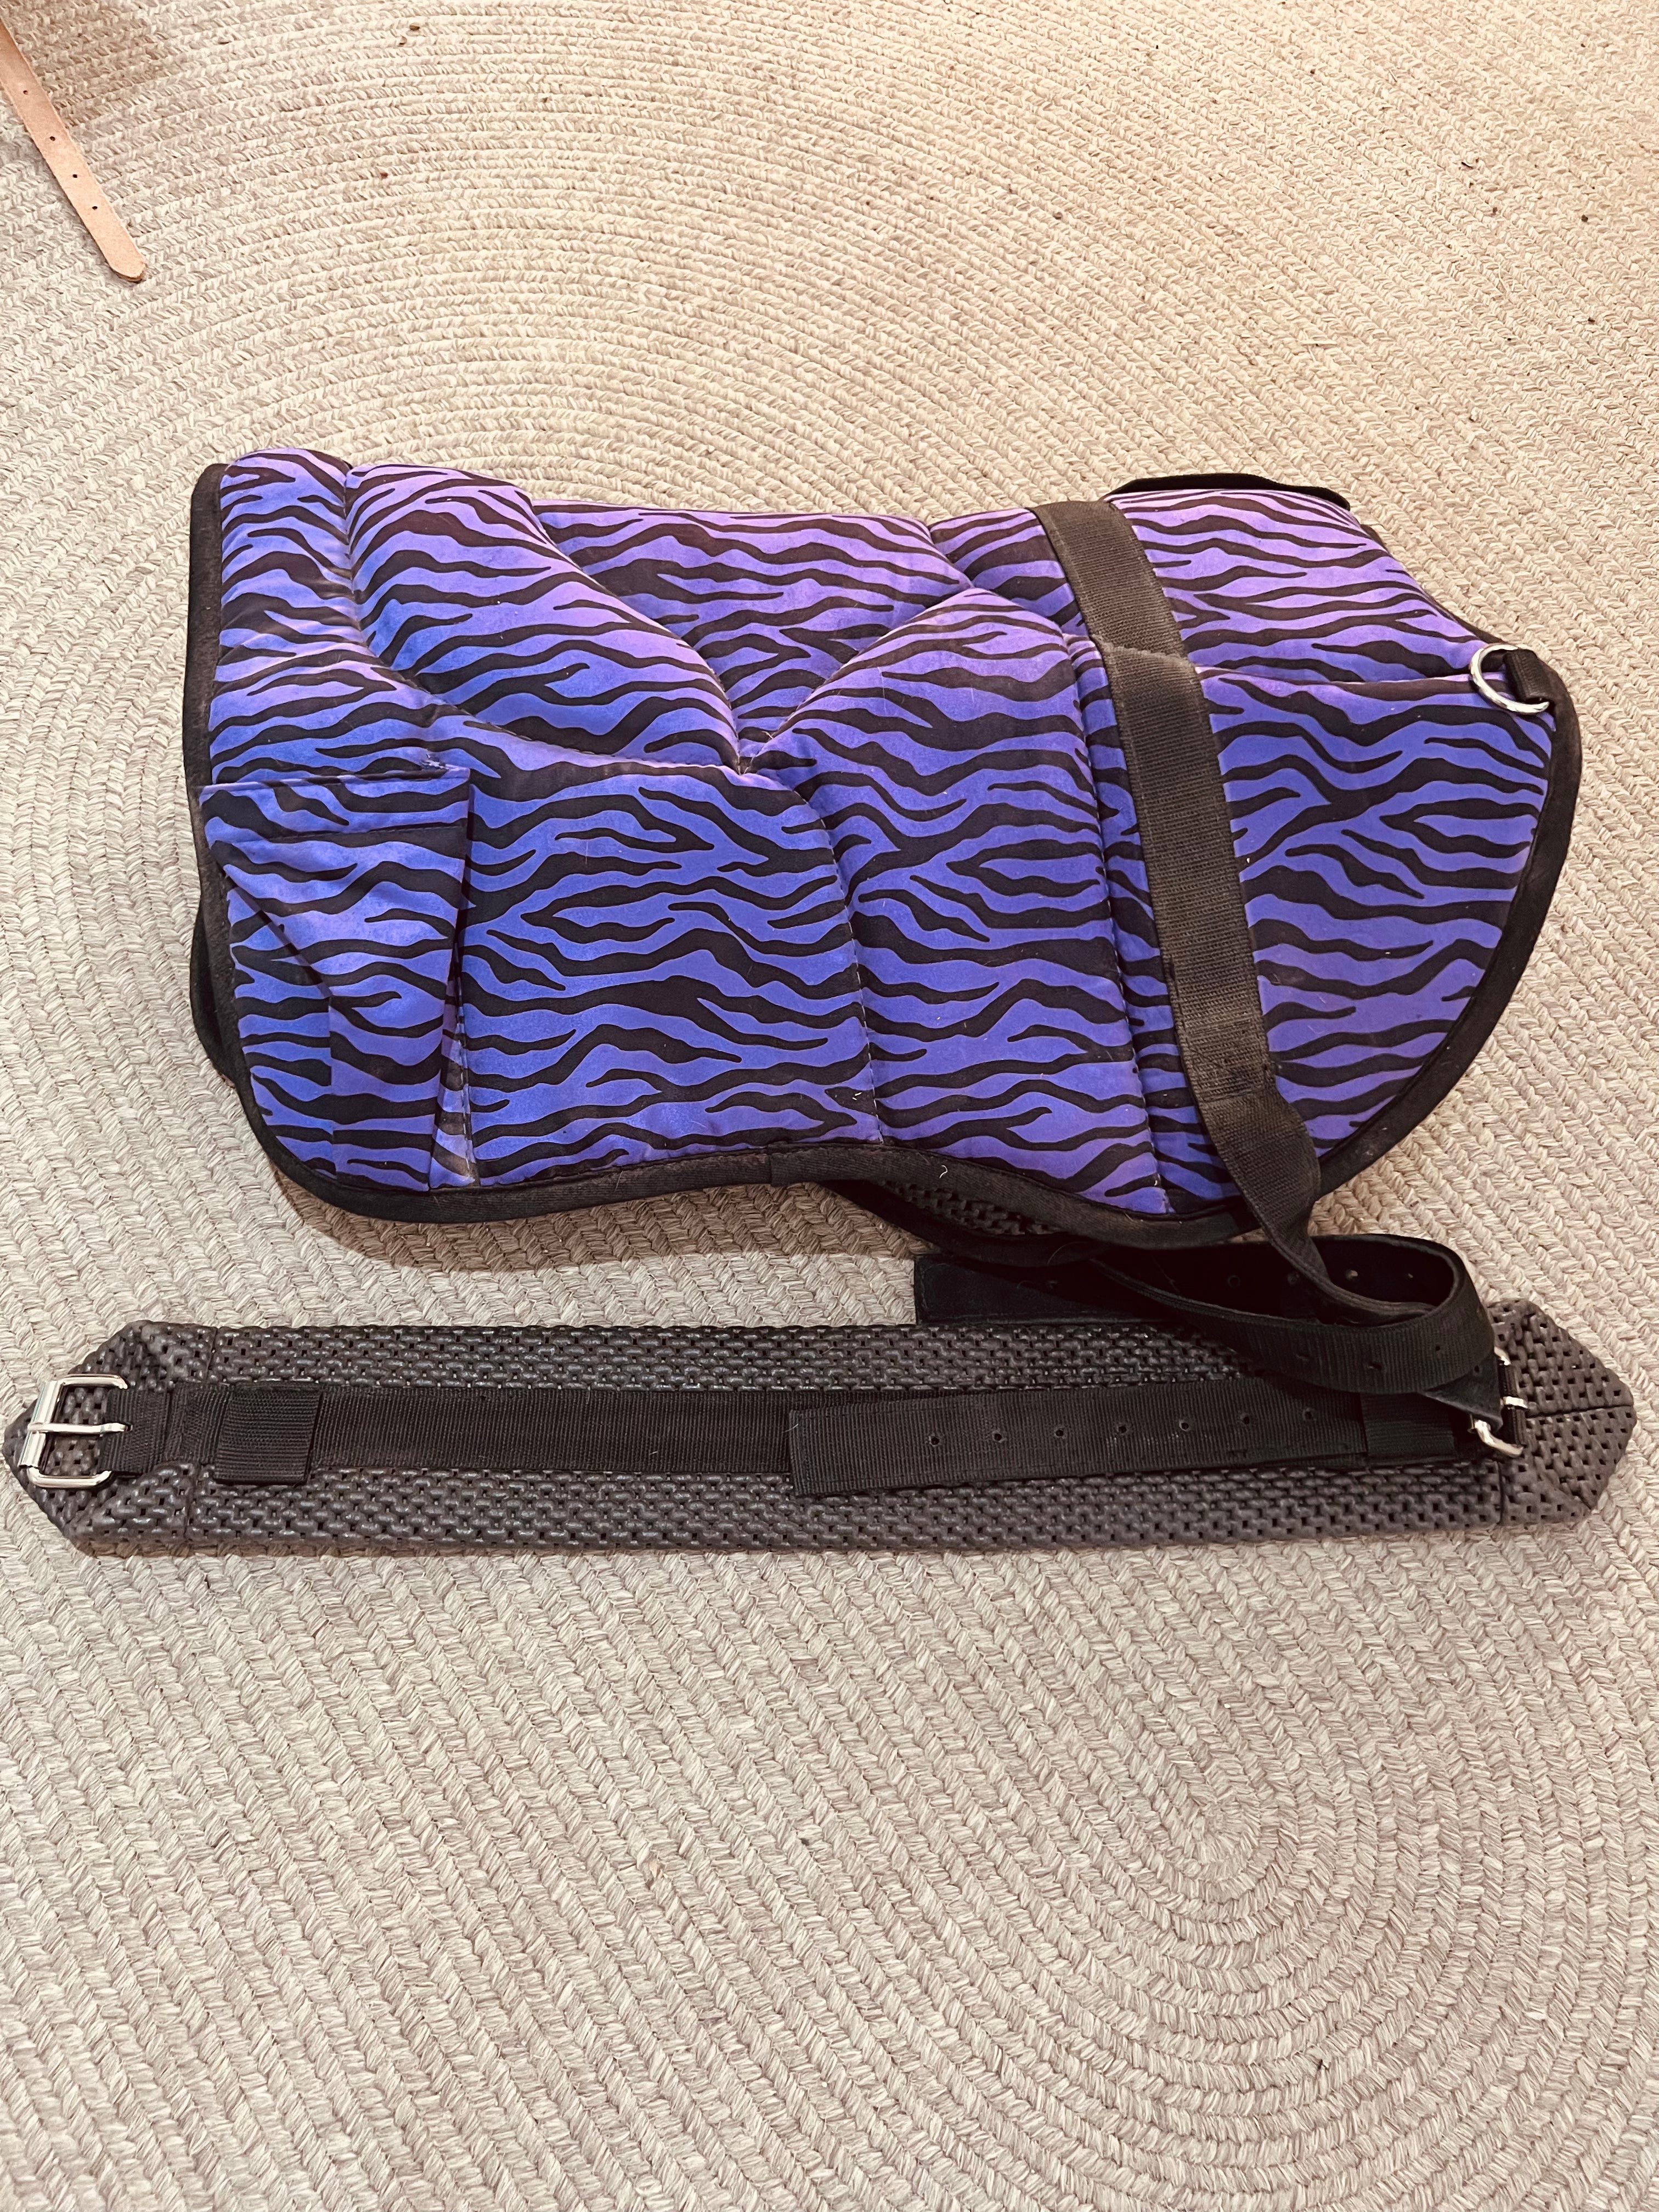 Best Friend Western Style Bareback Pad with Pockets - Horse - Purple Zebra